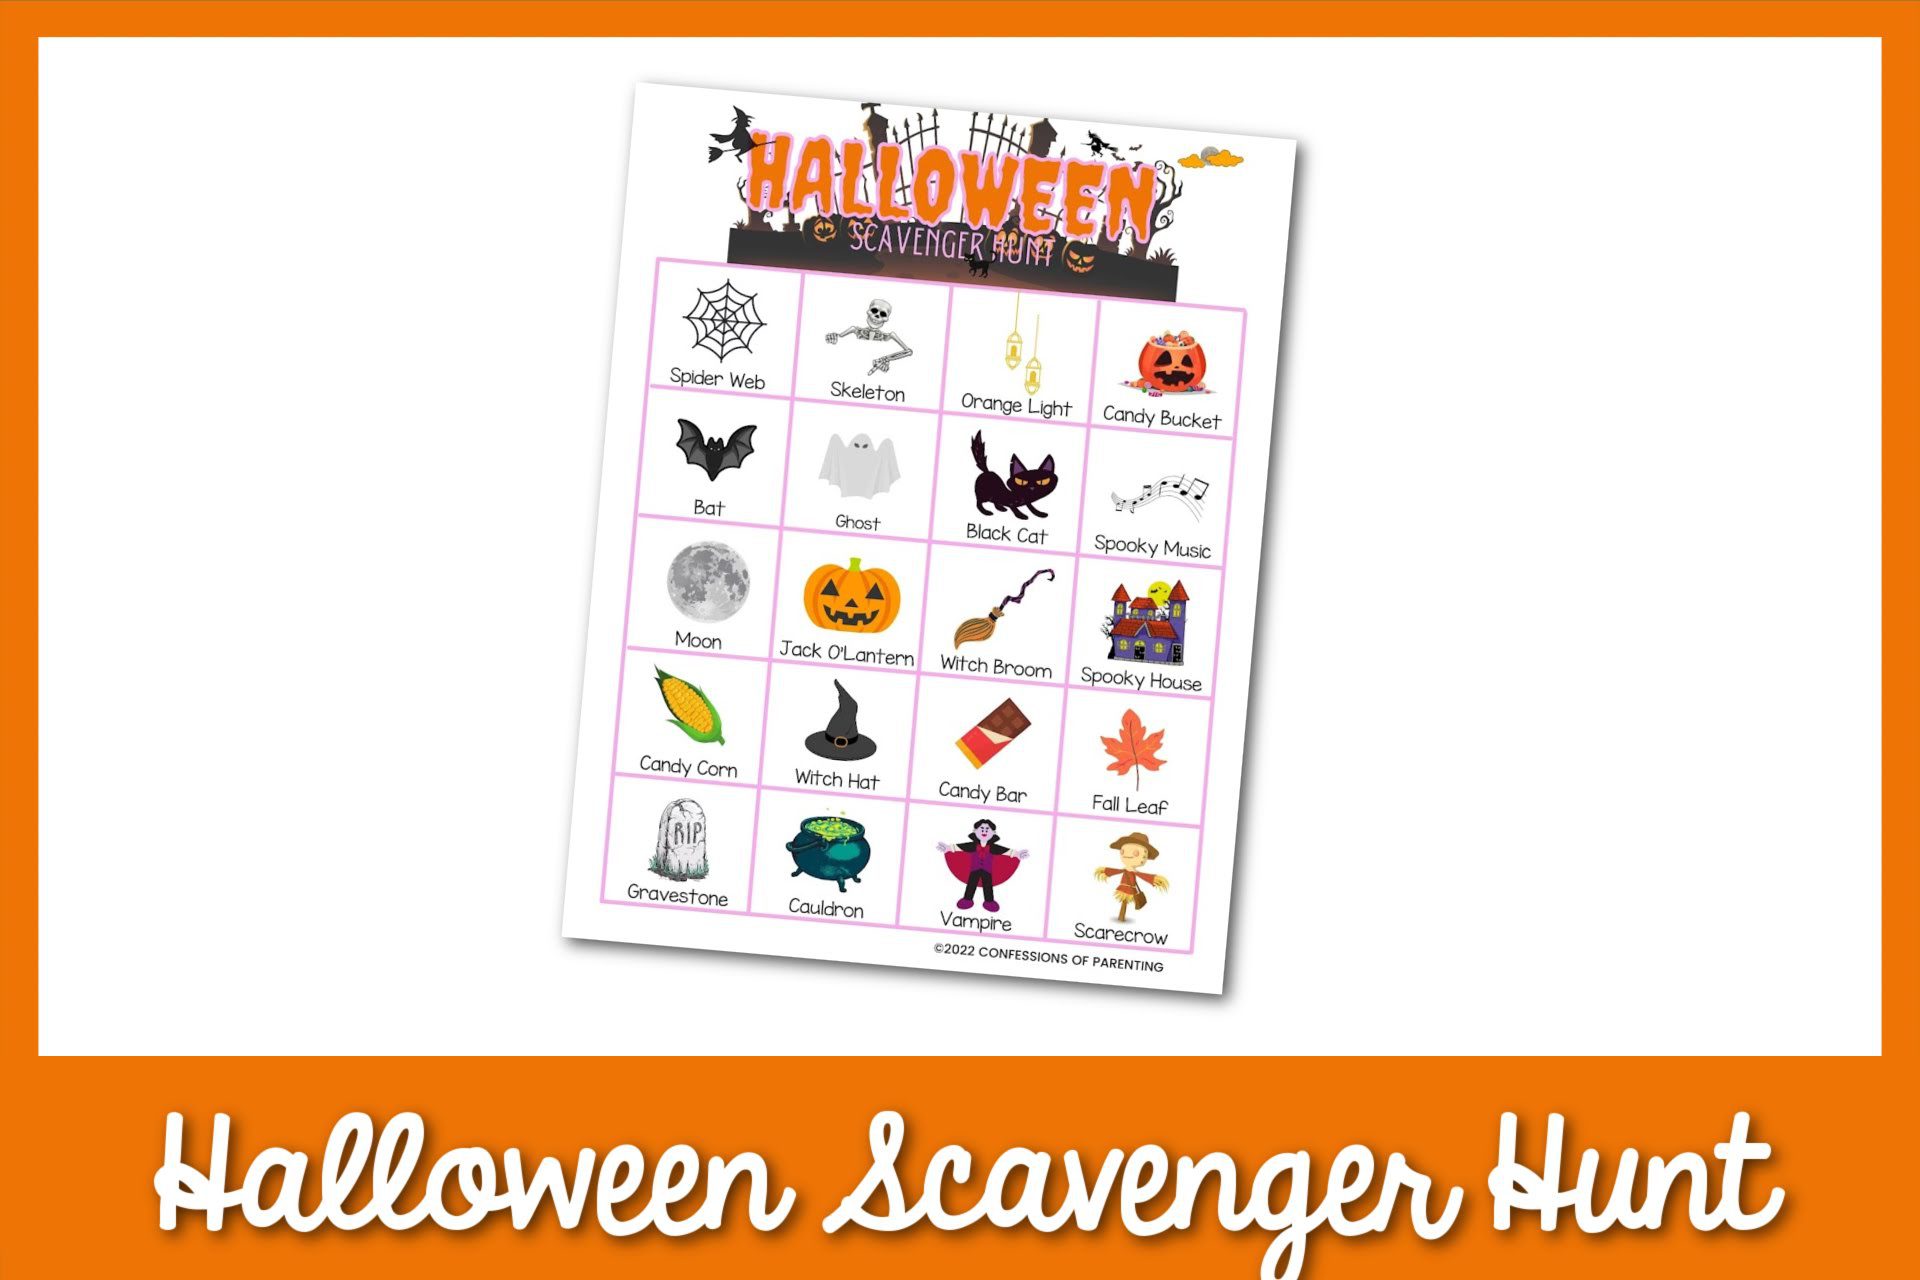 feature image: Halloween Scavenger Hunt card printable with orange border